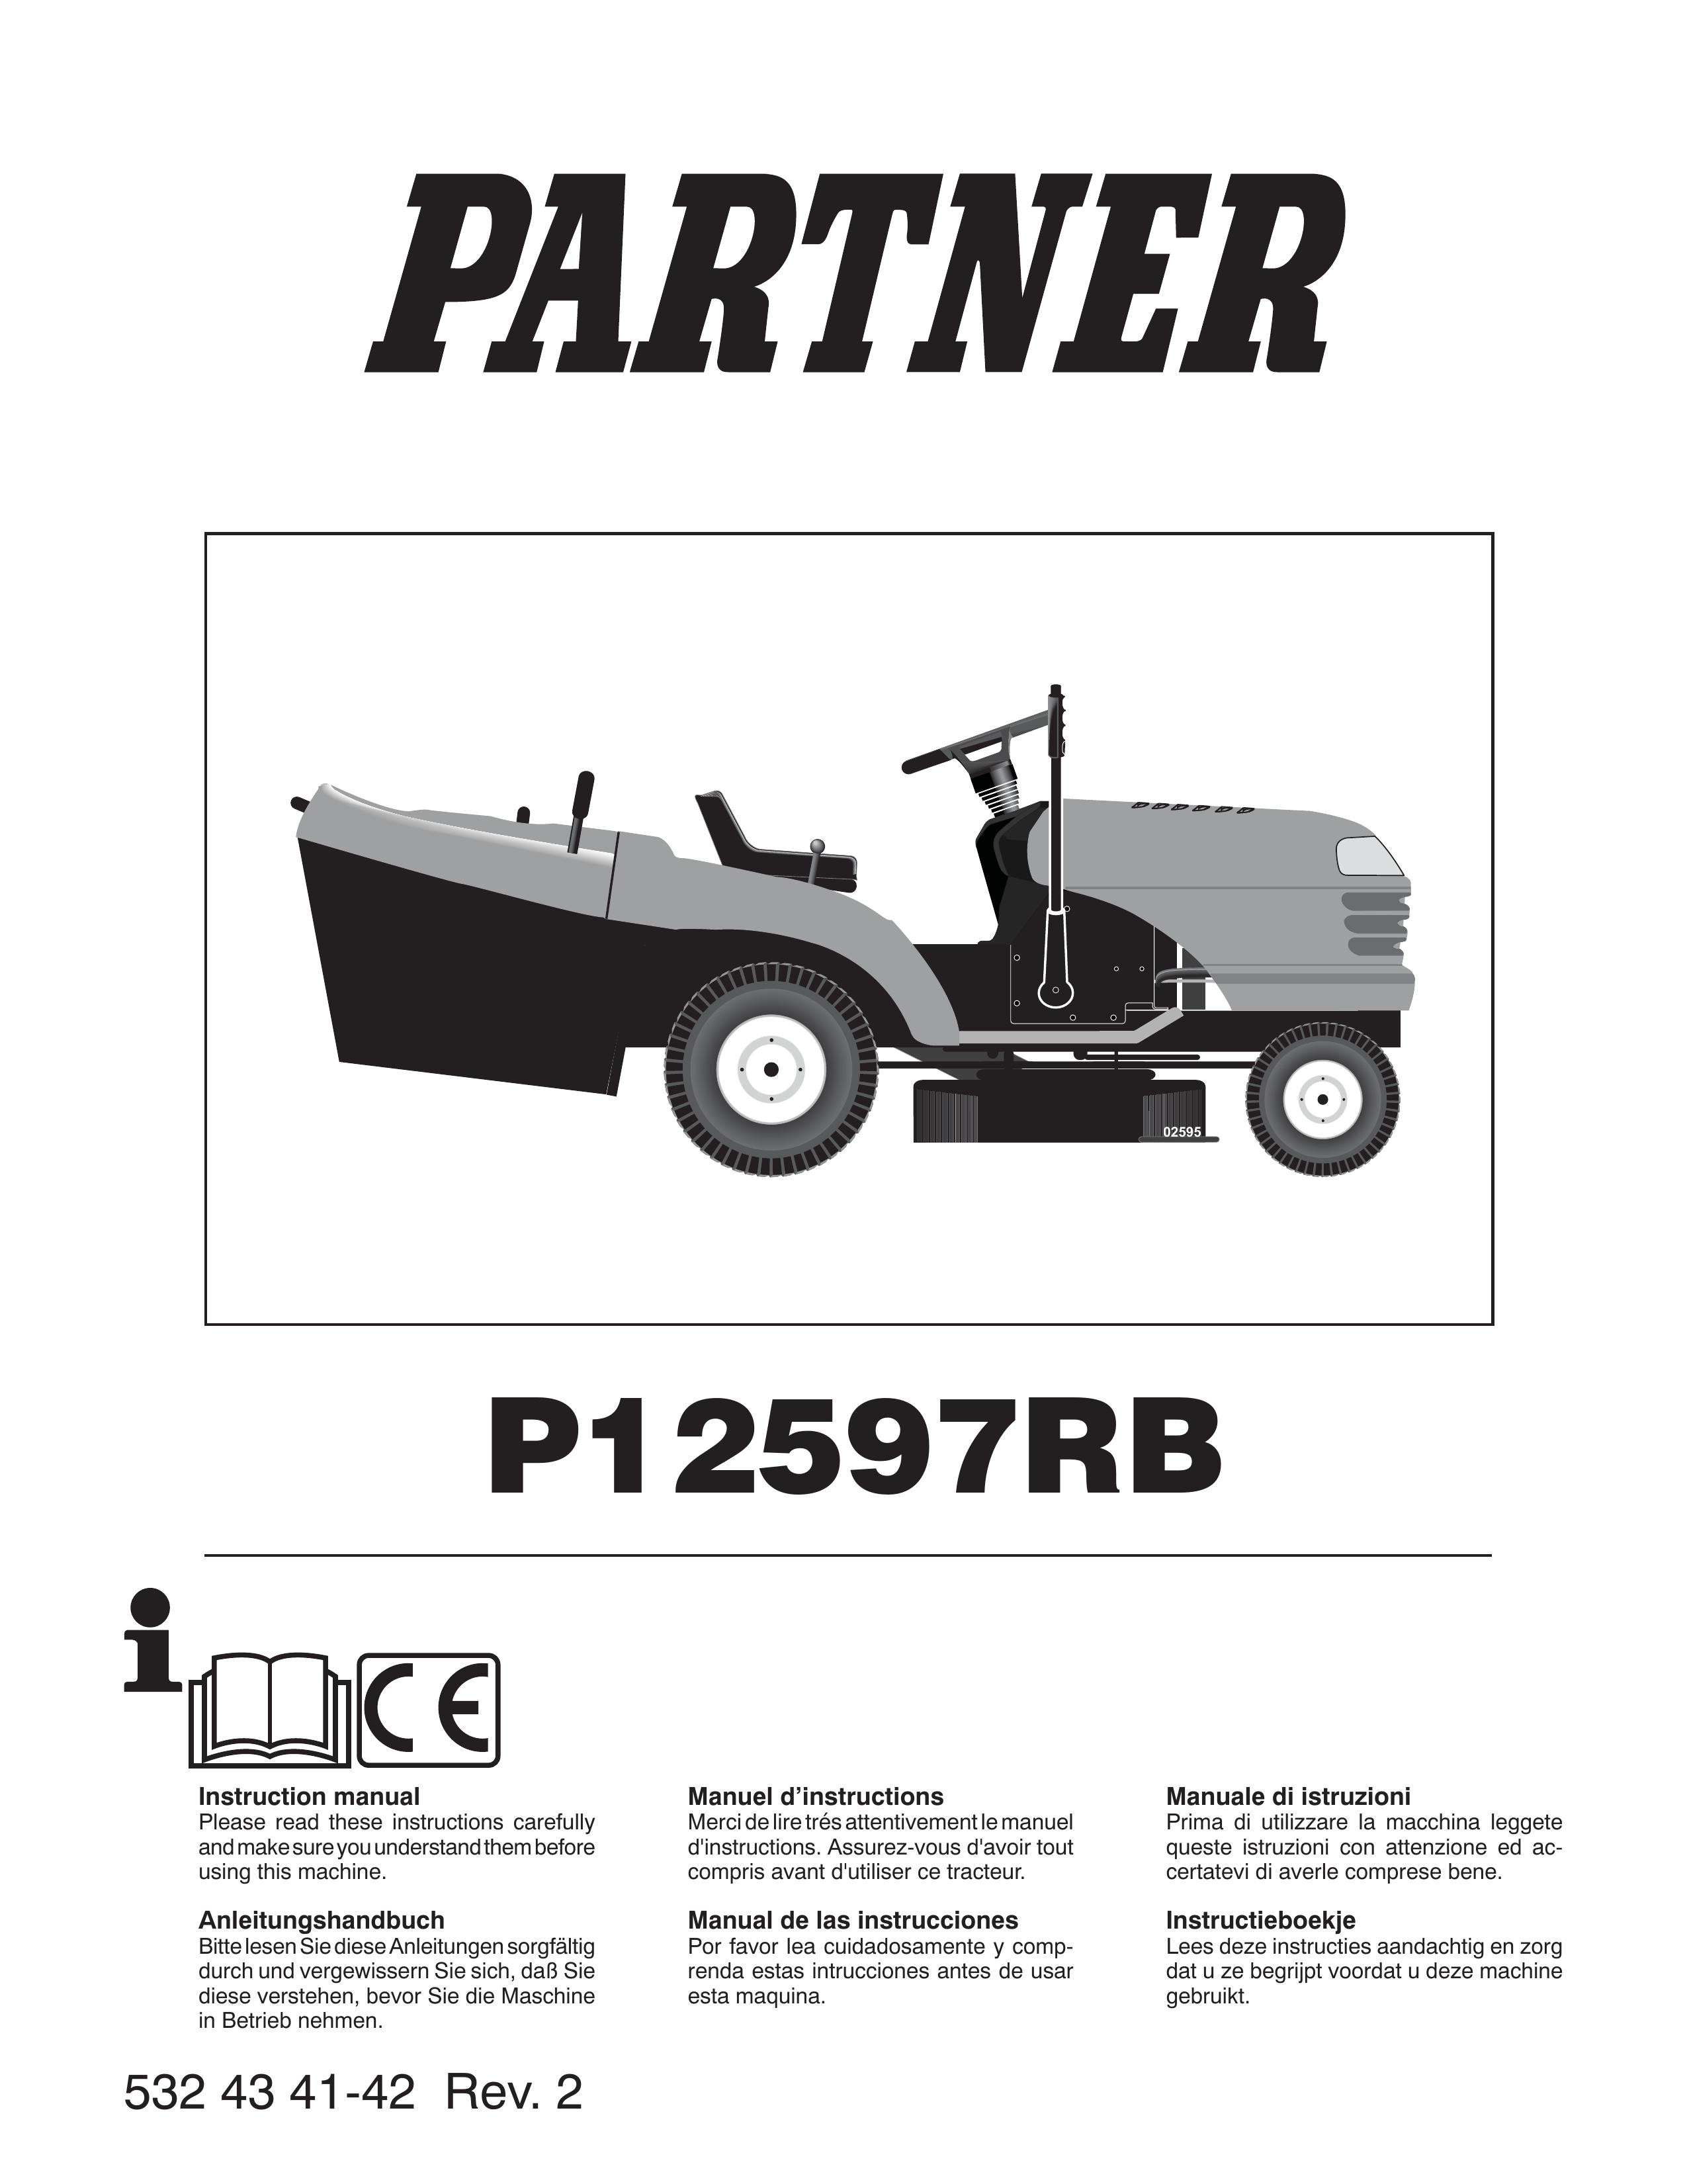 Partner Tech P12597RB Lawn Mower User Manual